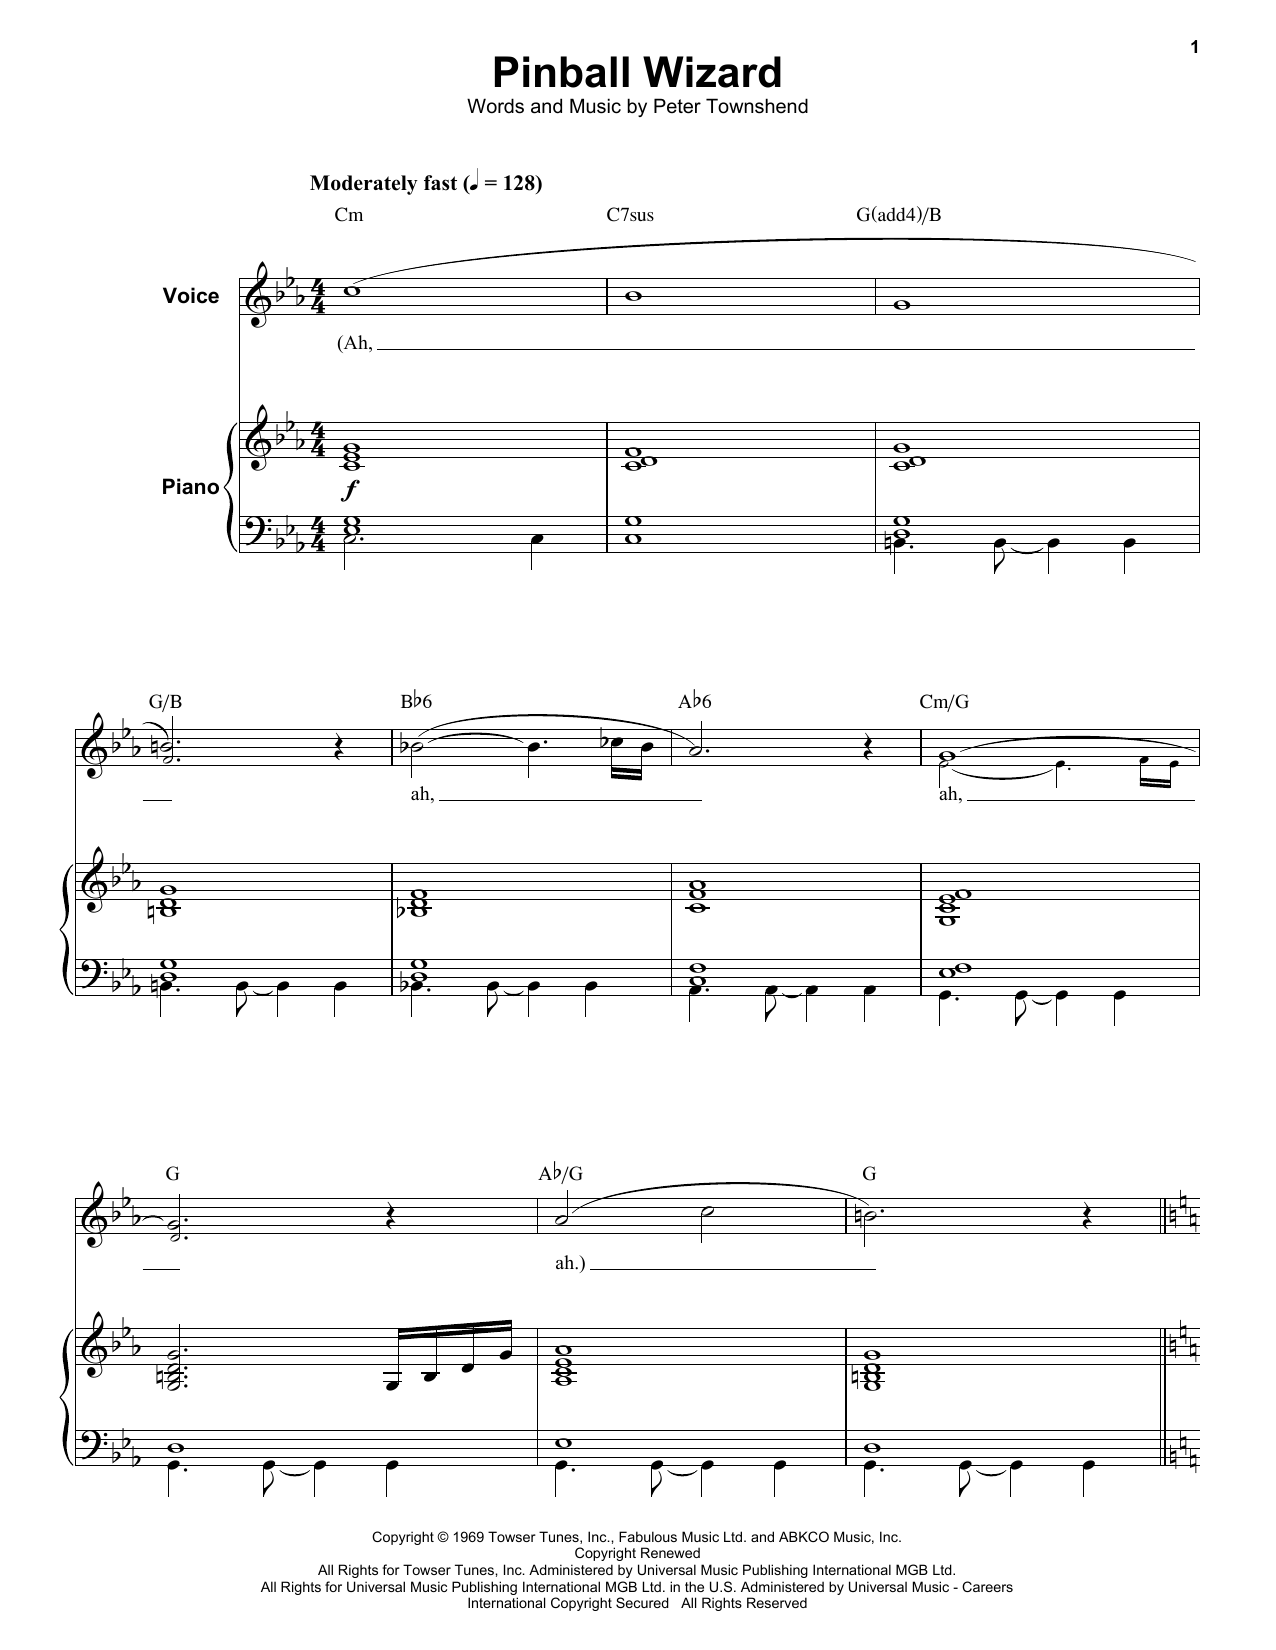 Download Elton John Pinball Wizard Sheet Music and learn how to play Guitar Chords/Lyrics PDF digital score in minutes